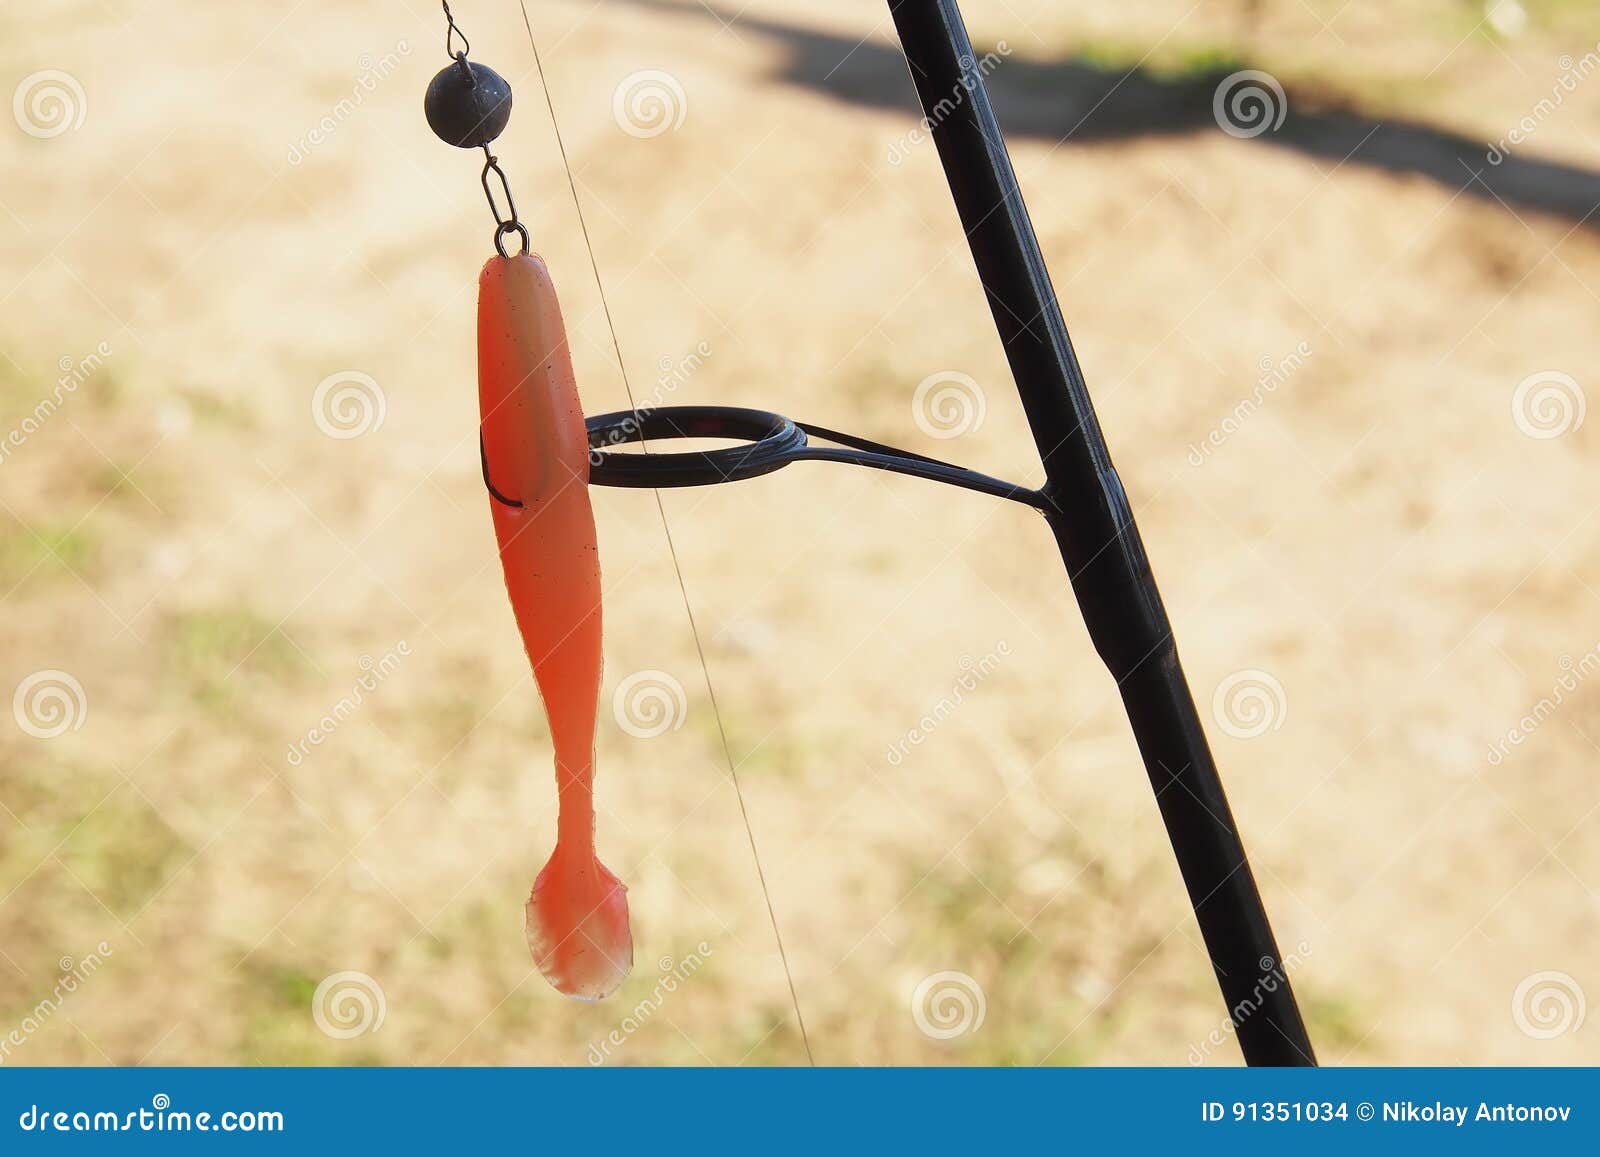 https://thumbs.dreamstime.com/z/rubber-silicone-orange-fishing-bait-hook-fishing-line-rod-outdoors-91351034.jpg